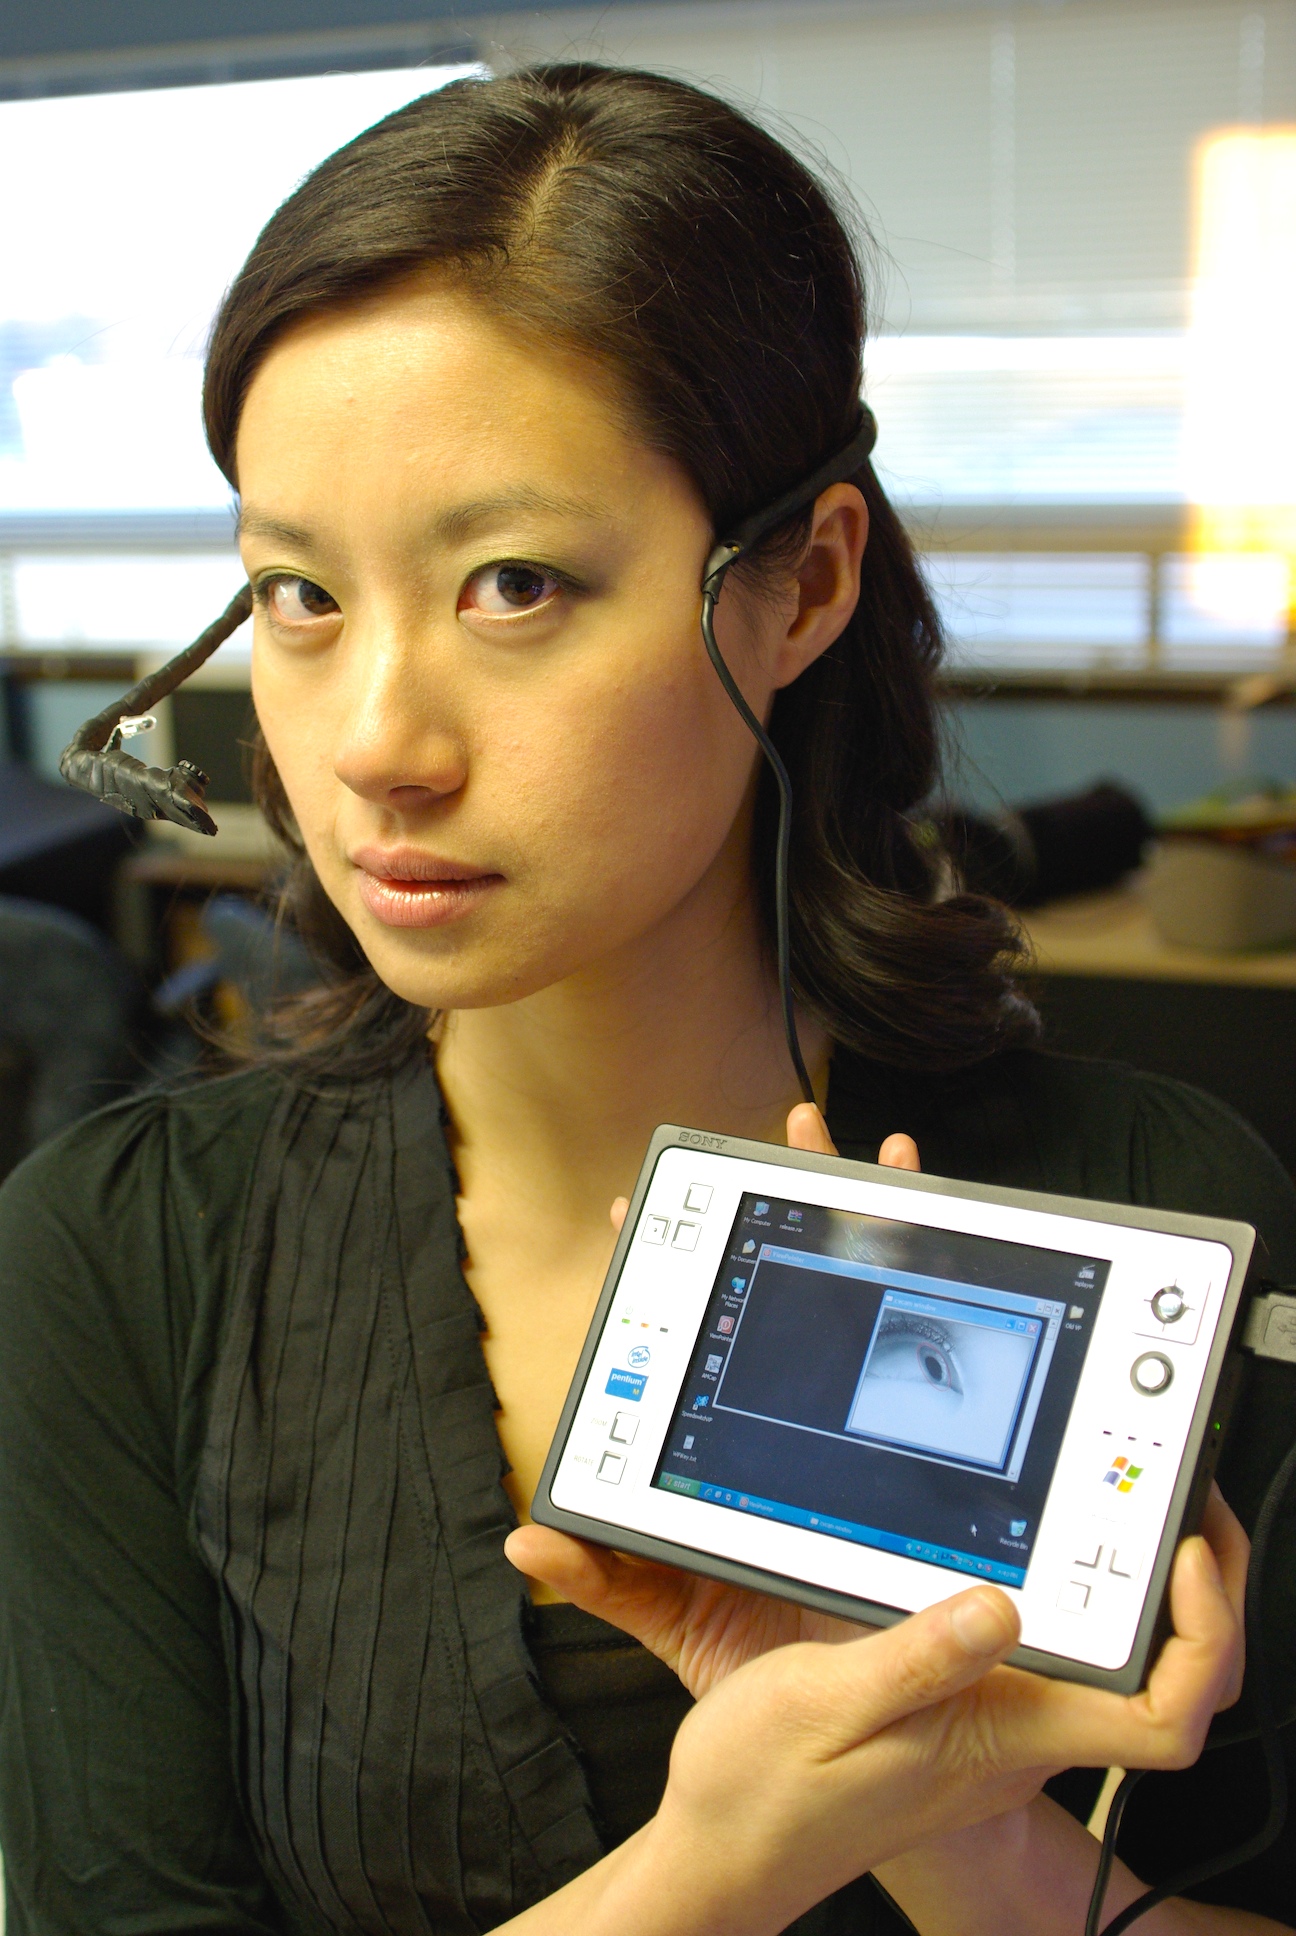 viewpointer (2005) mobile calibration-free eye tracker